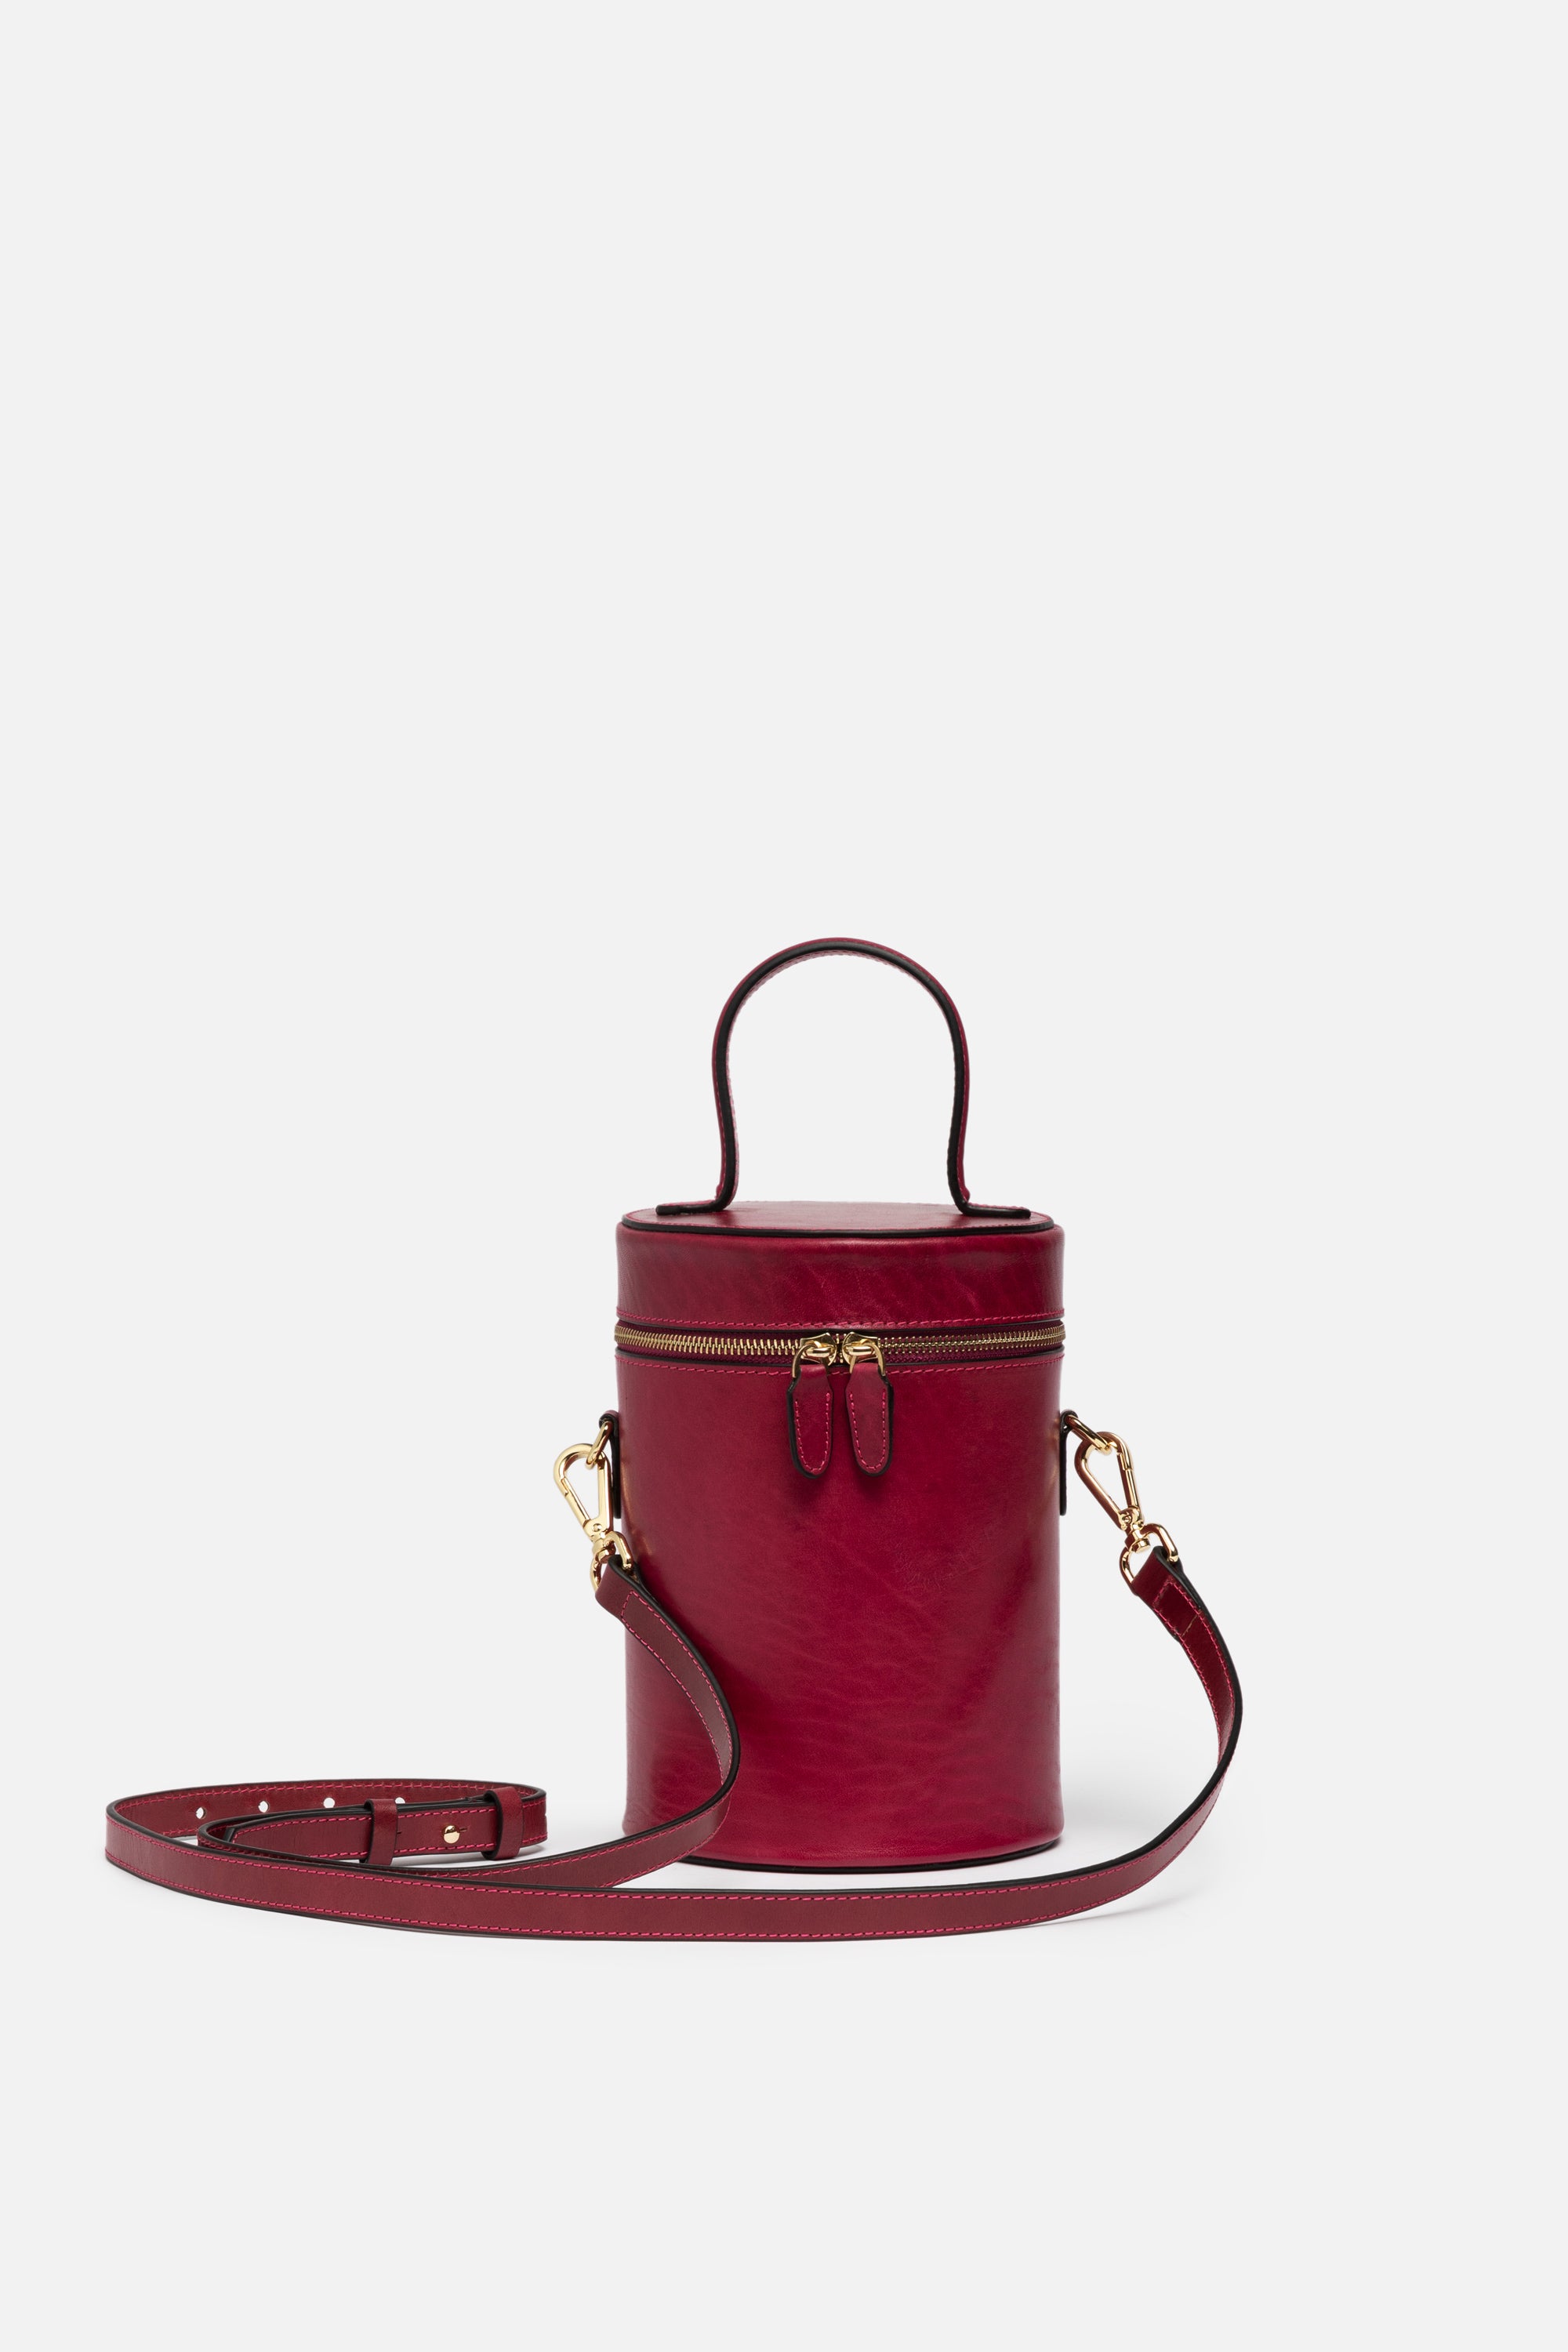 Silver & Riley Parisian Leather Belt Bag in Fuchsia Pink